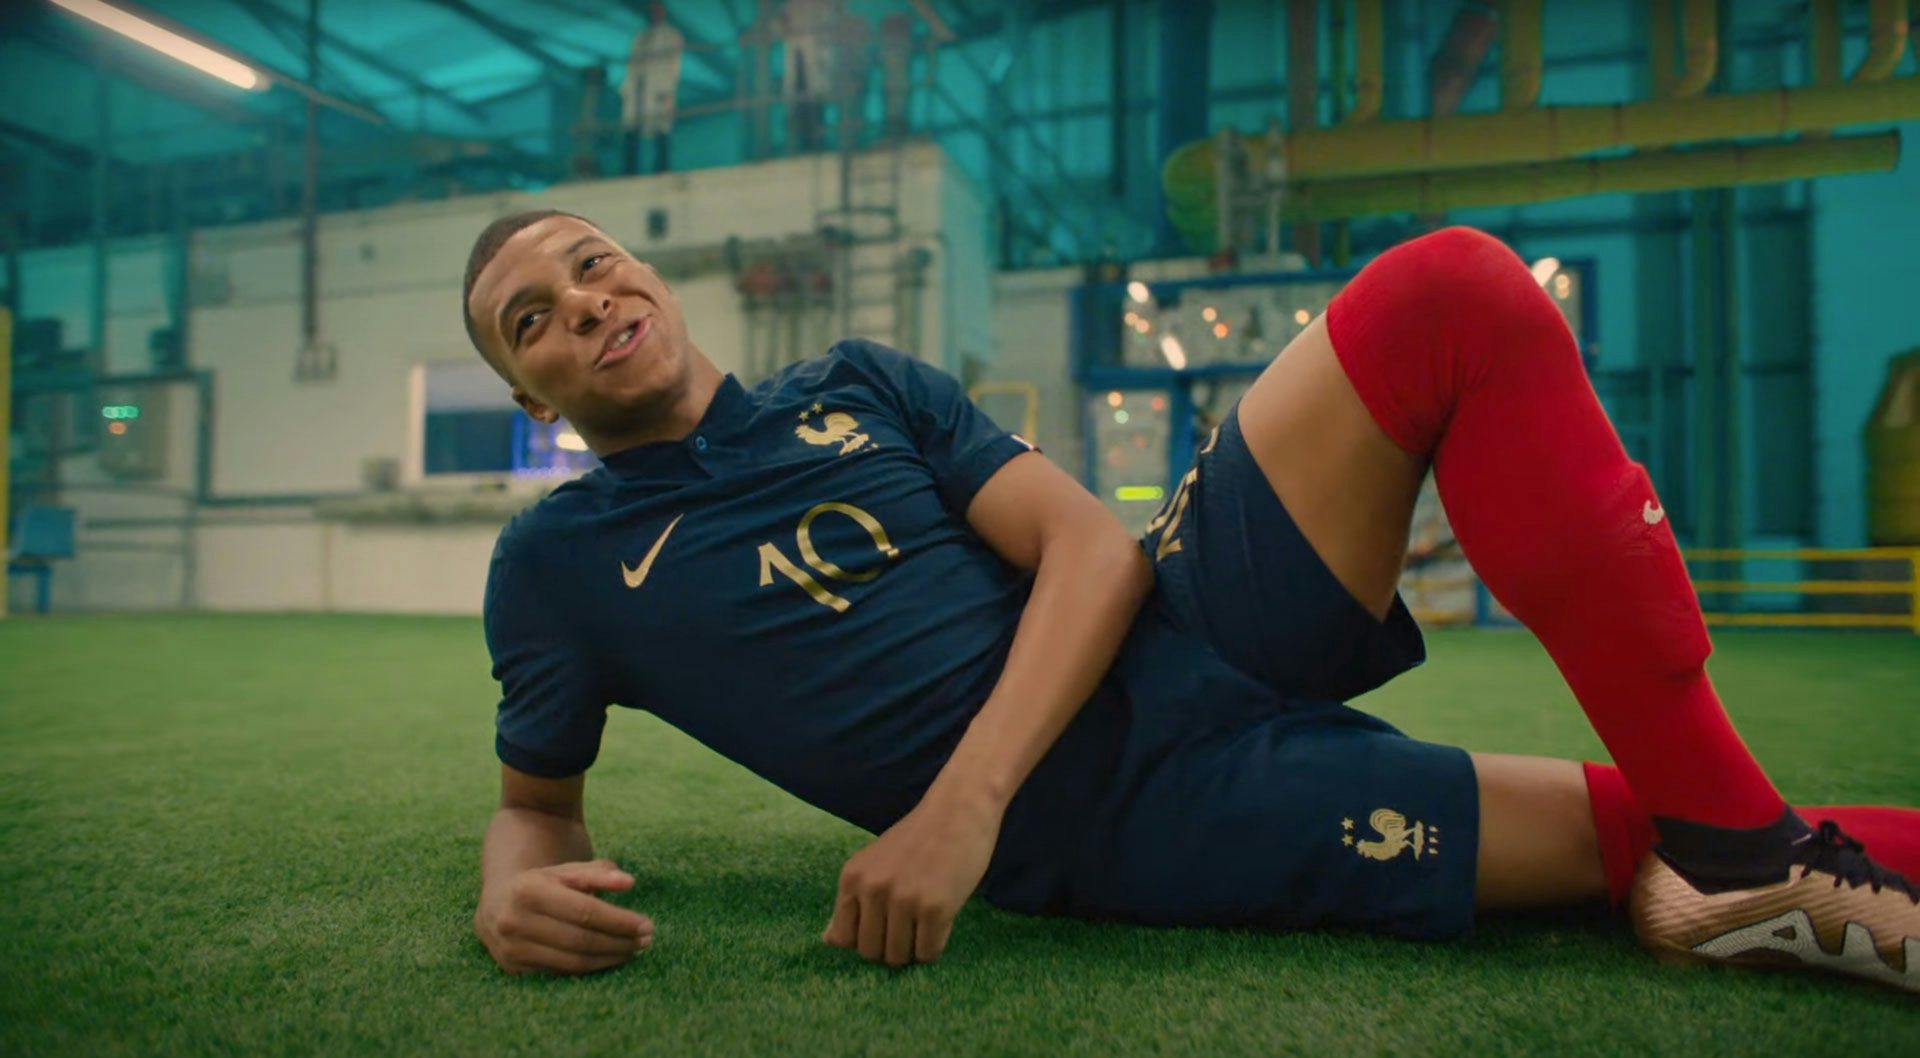 Muy enojado Metropolitano colección Nike enters the footballverse in its star-studded World Cup ad